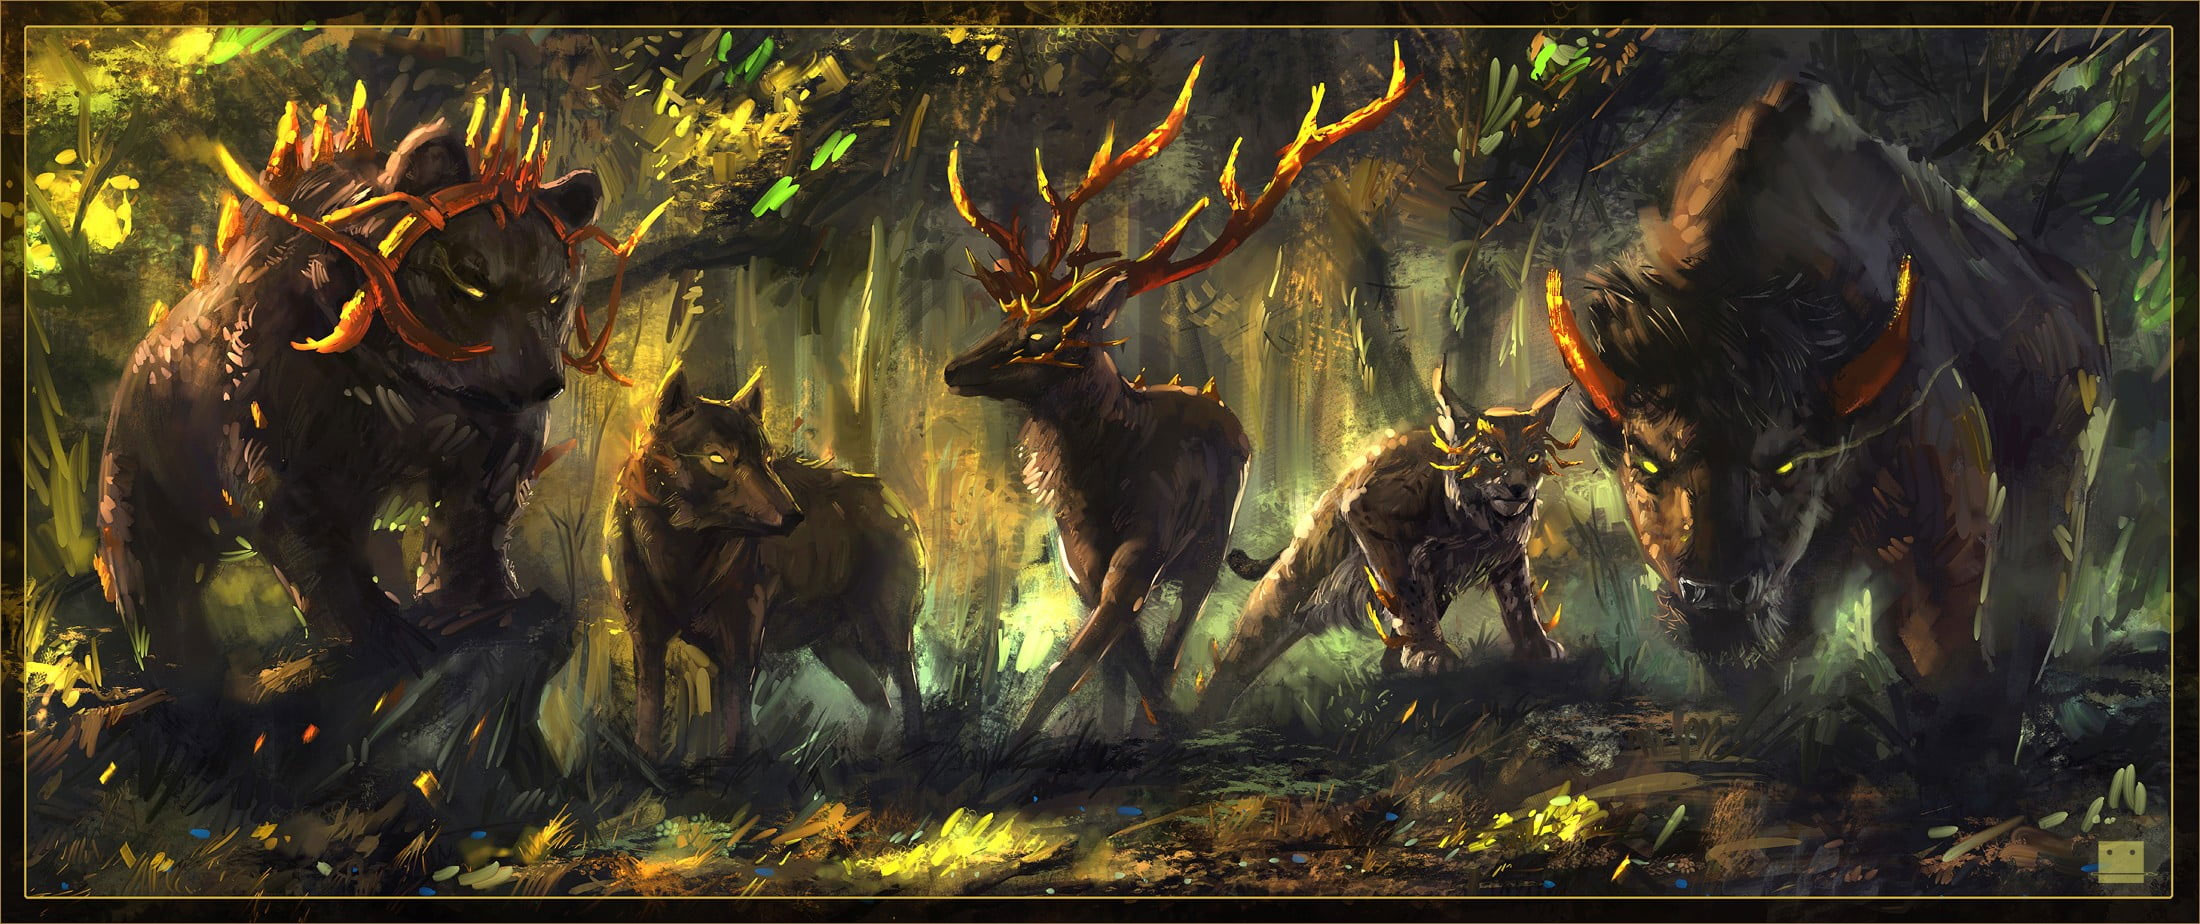 Animal hunter and hunted wallpaper, fantasy art, wolf, bears